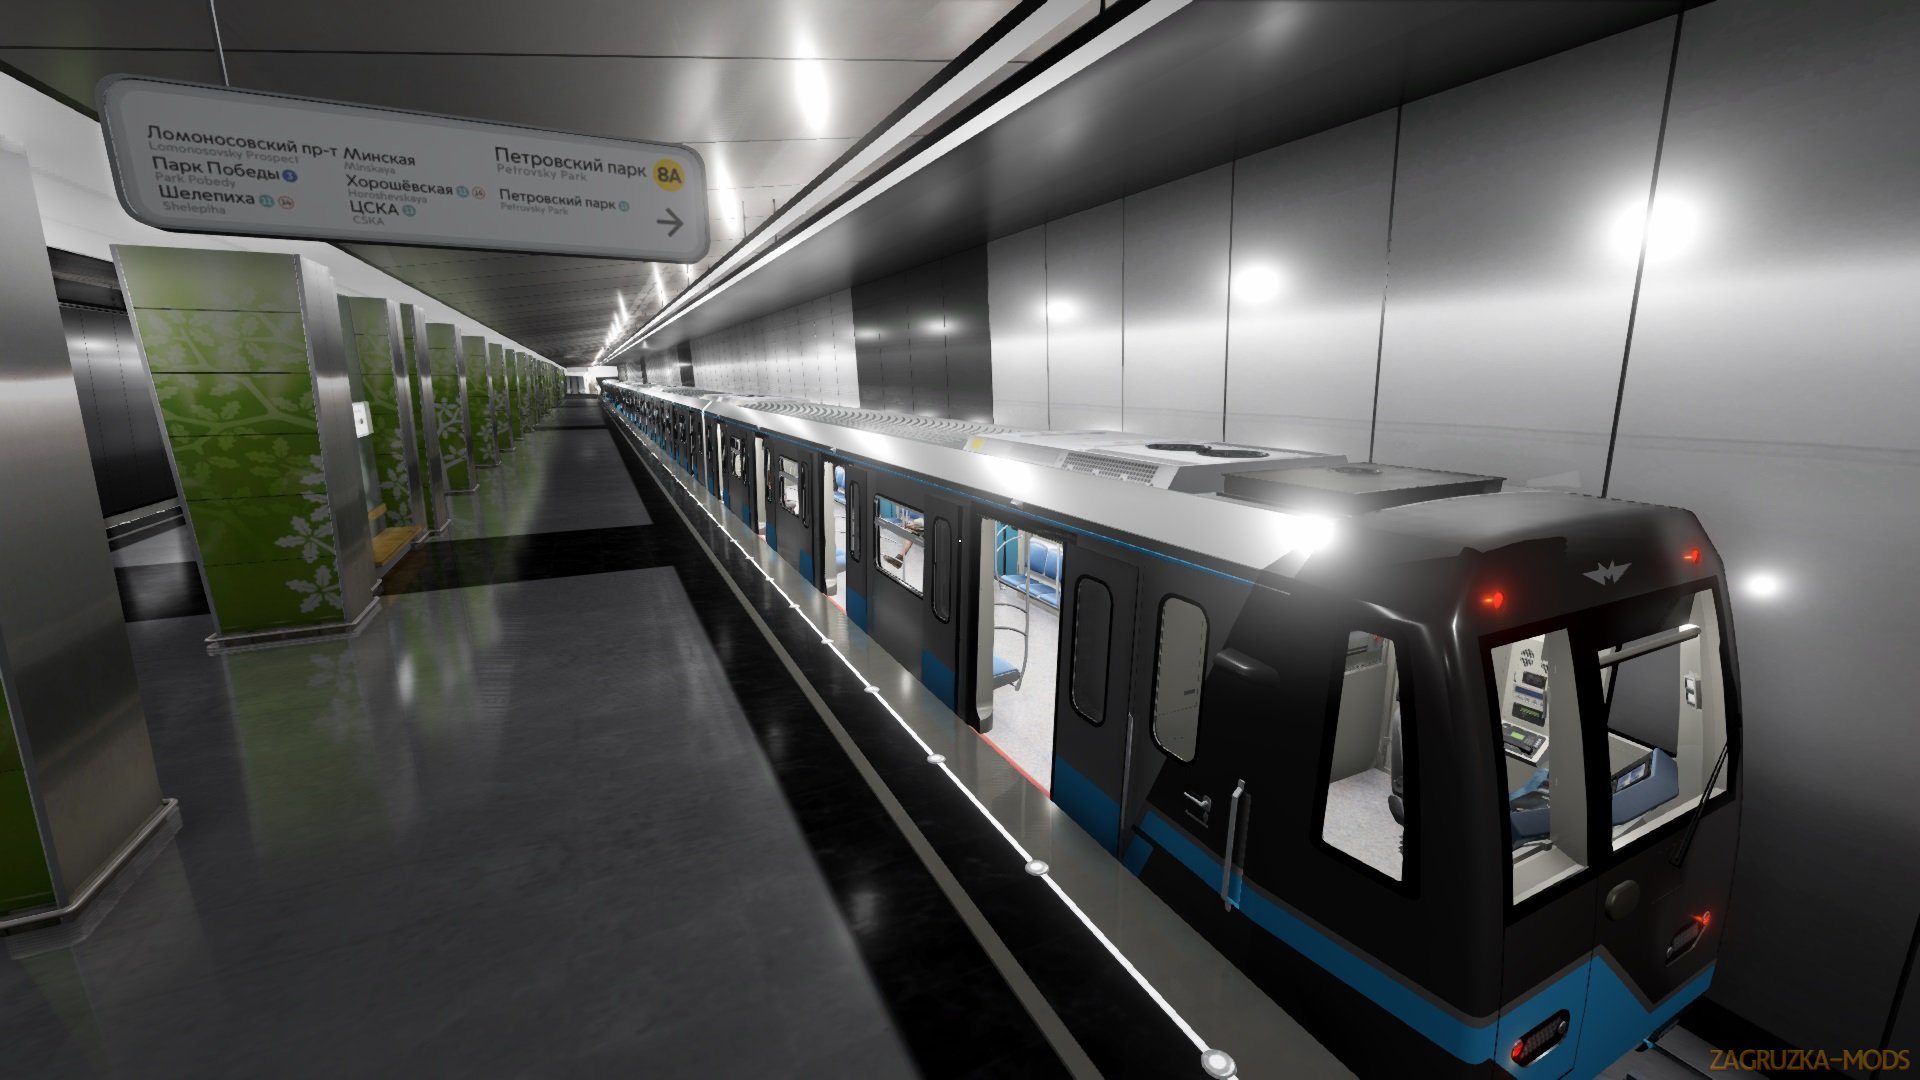 Metro Simulator 2019 - Official Trailer released